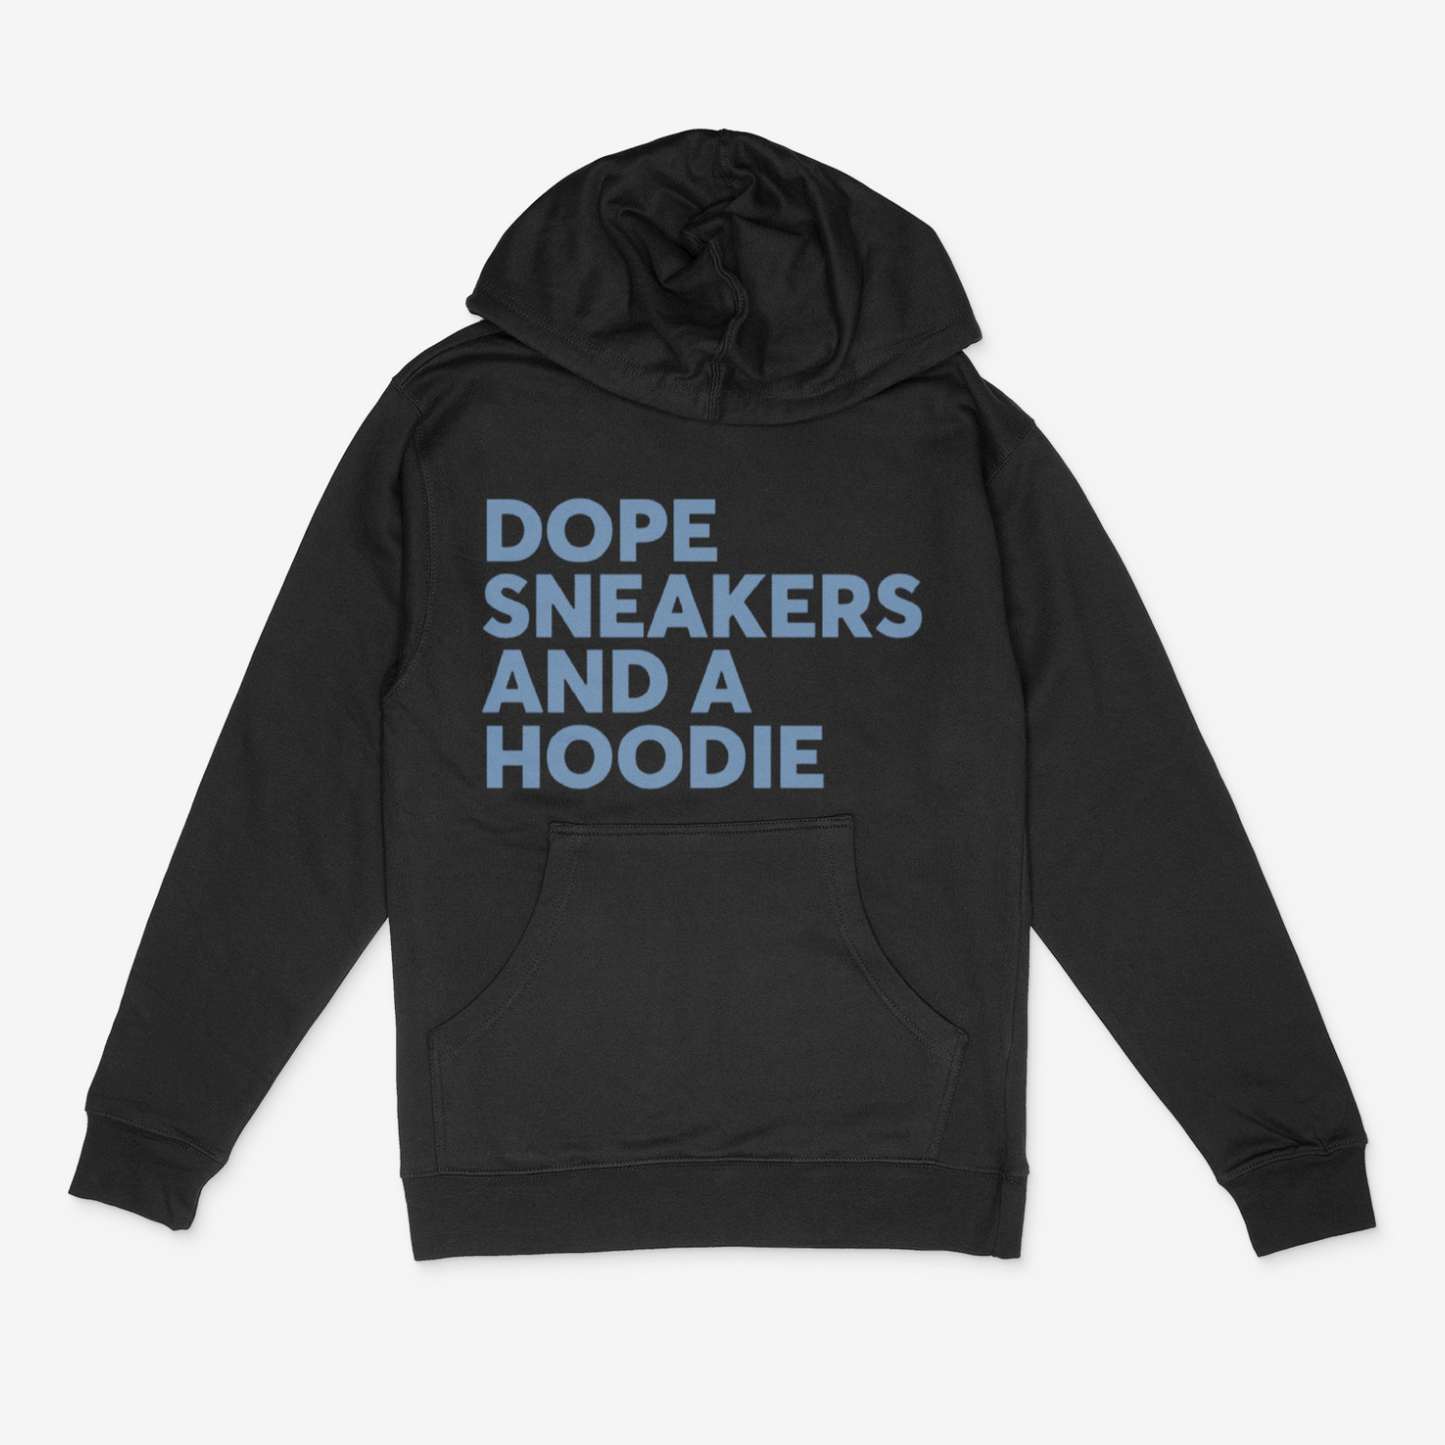 Dope Sneakers and A Hoodie (Denim)